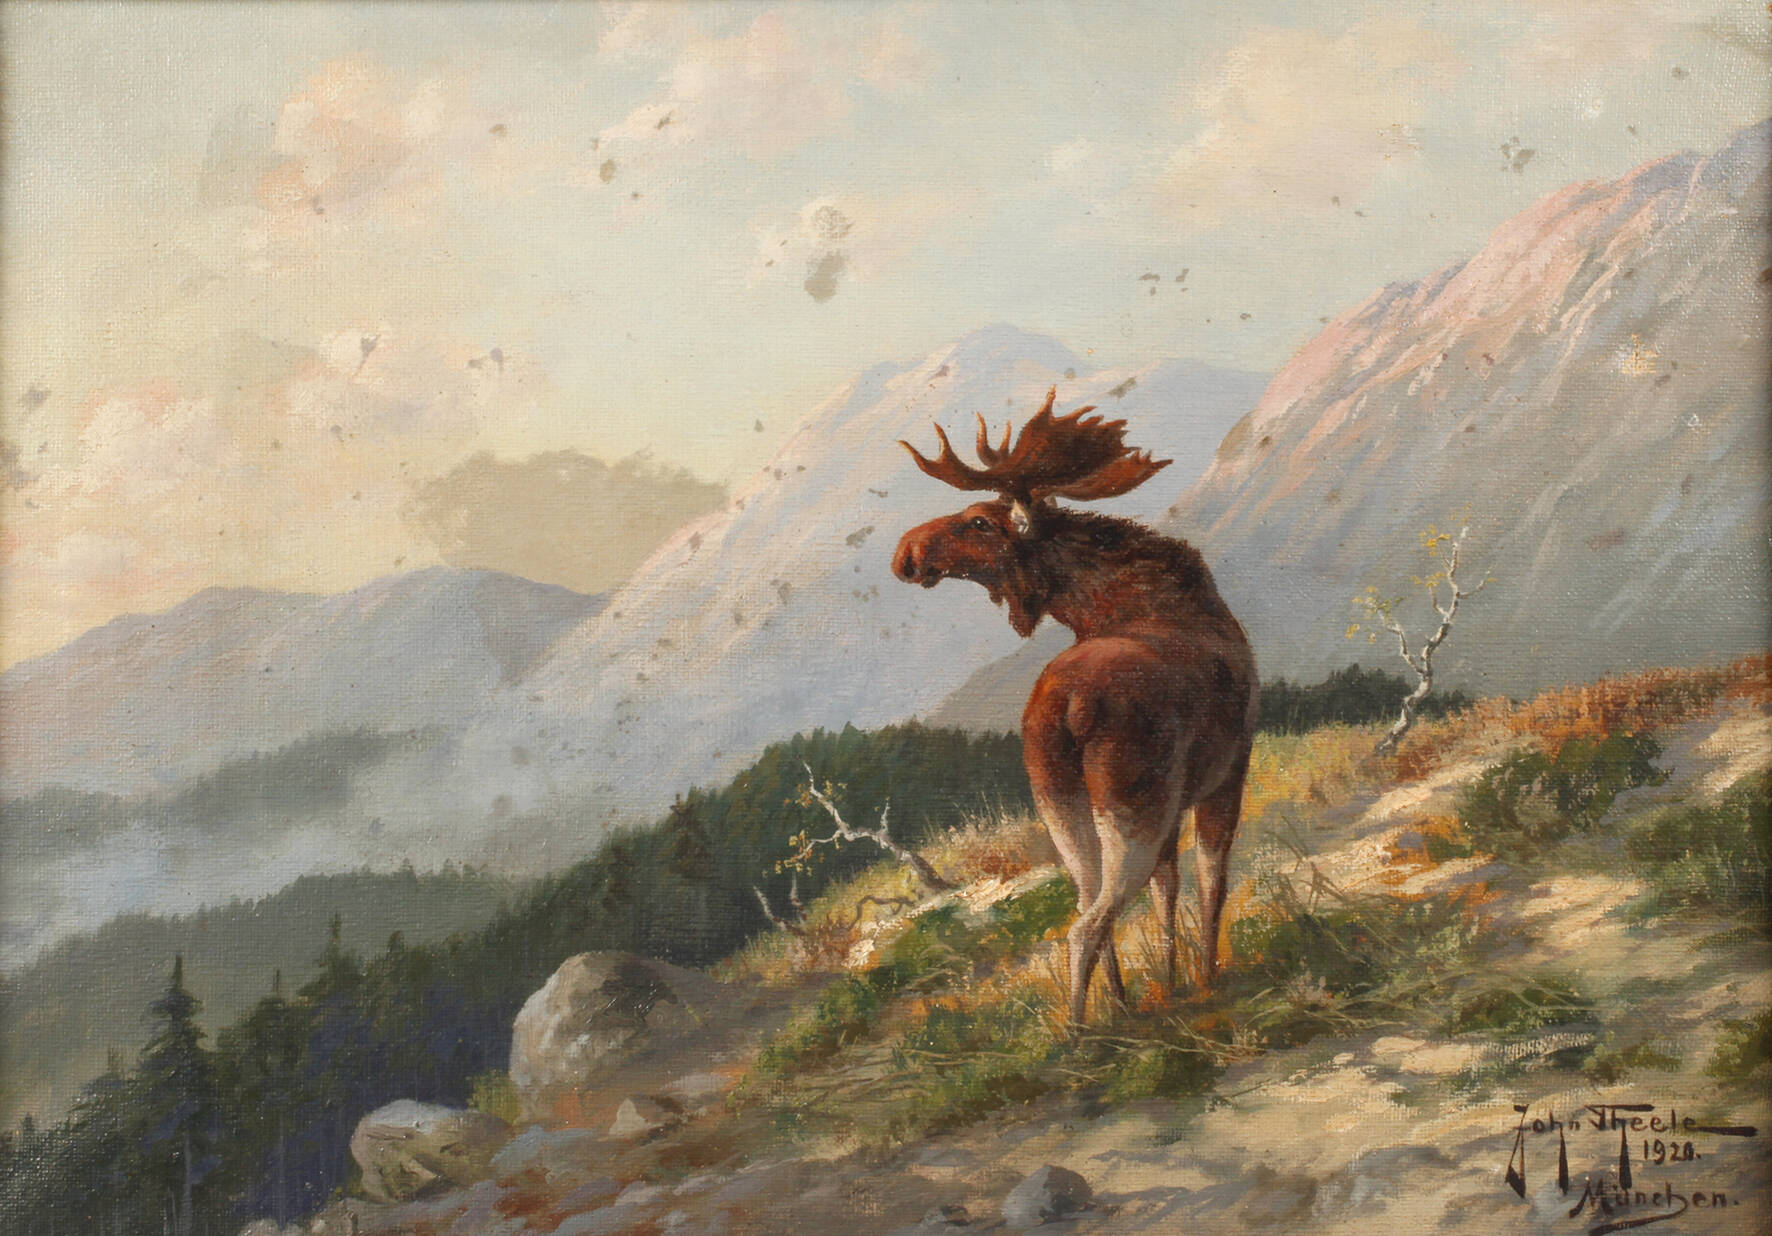 John Theele, "Elch im Hochgebirge"